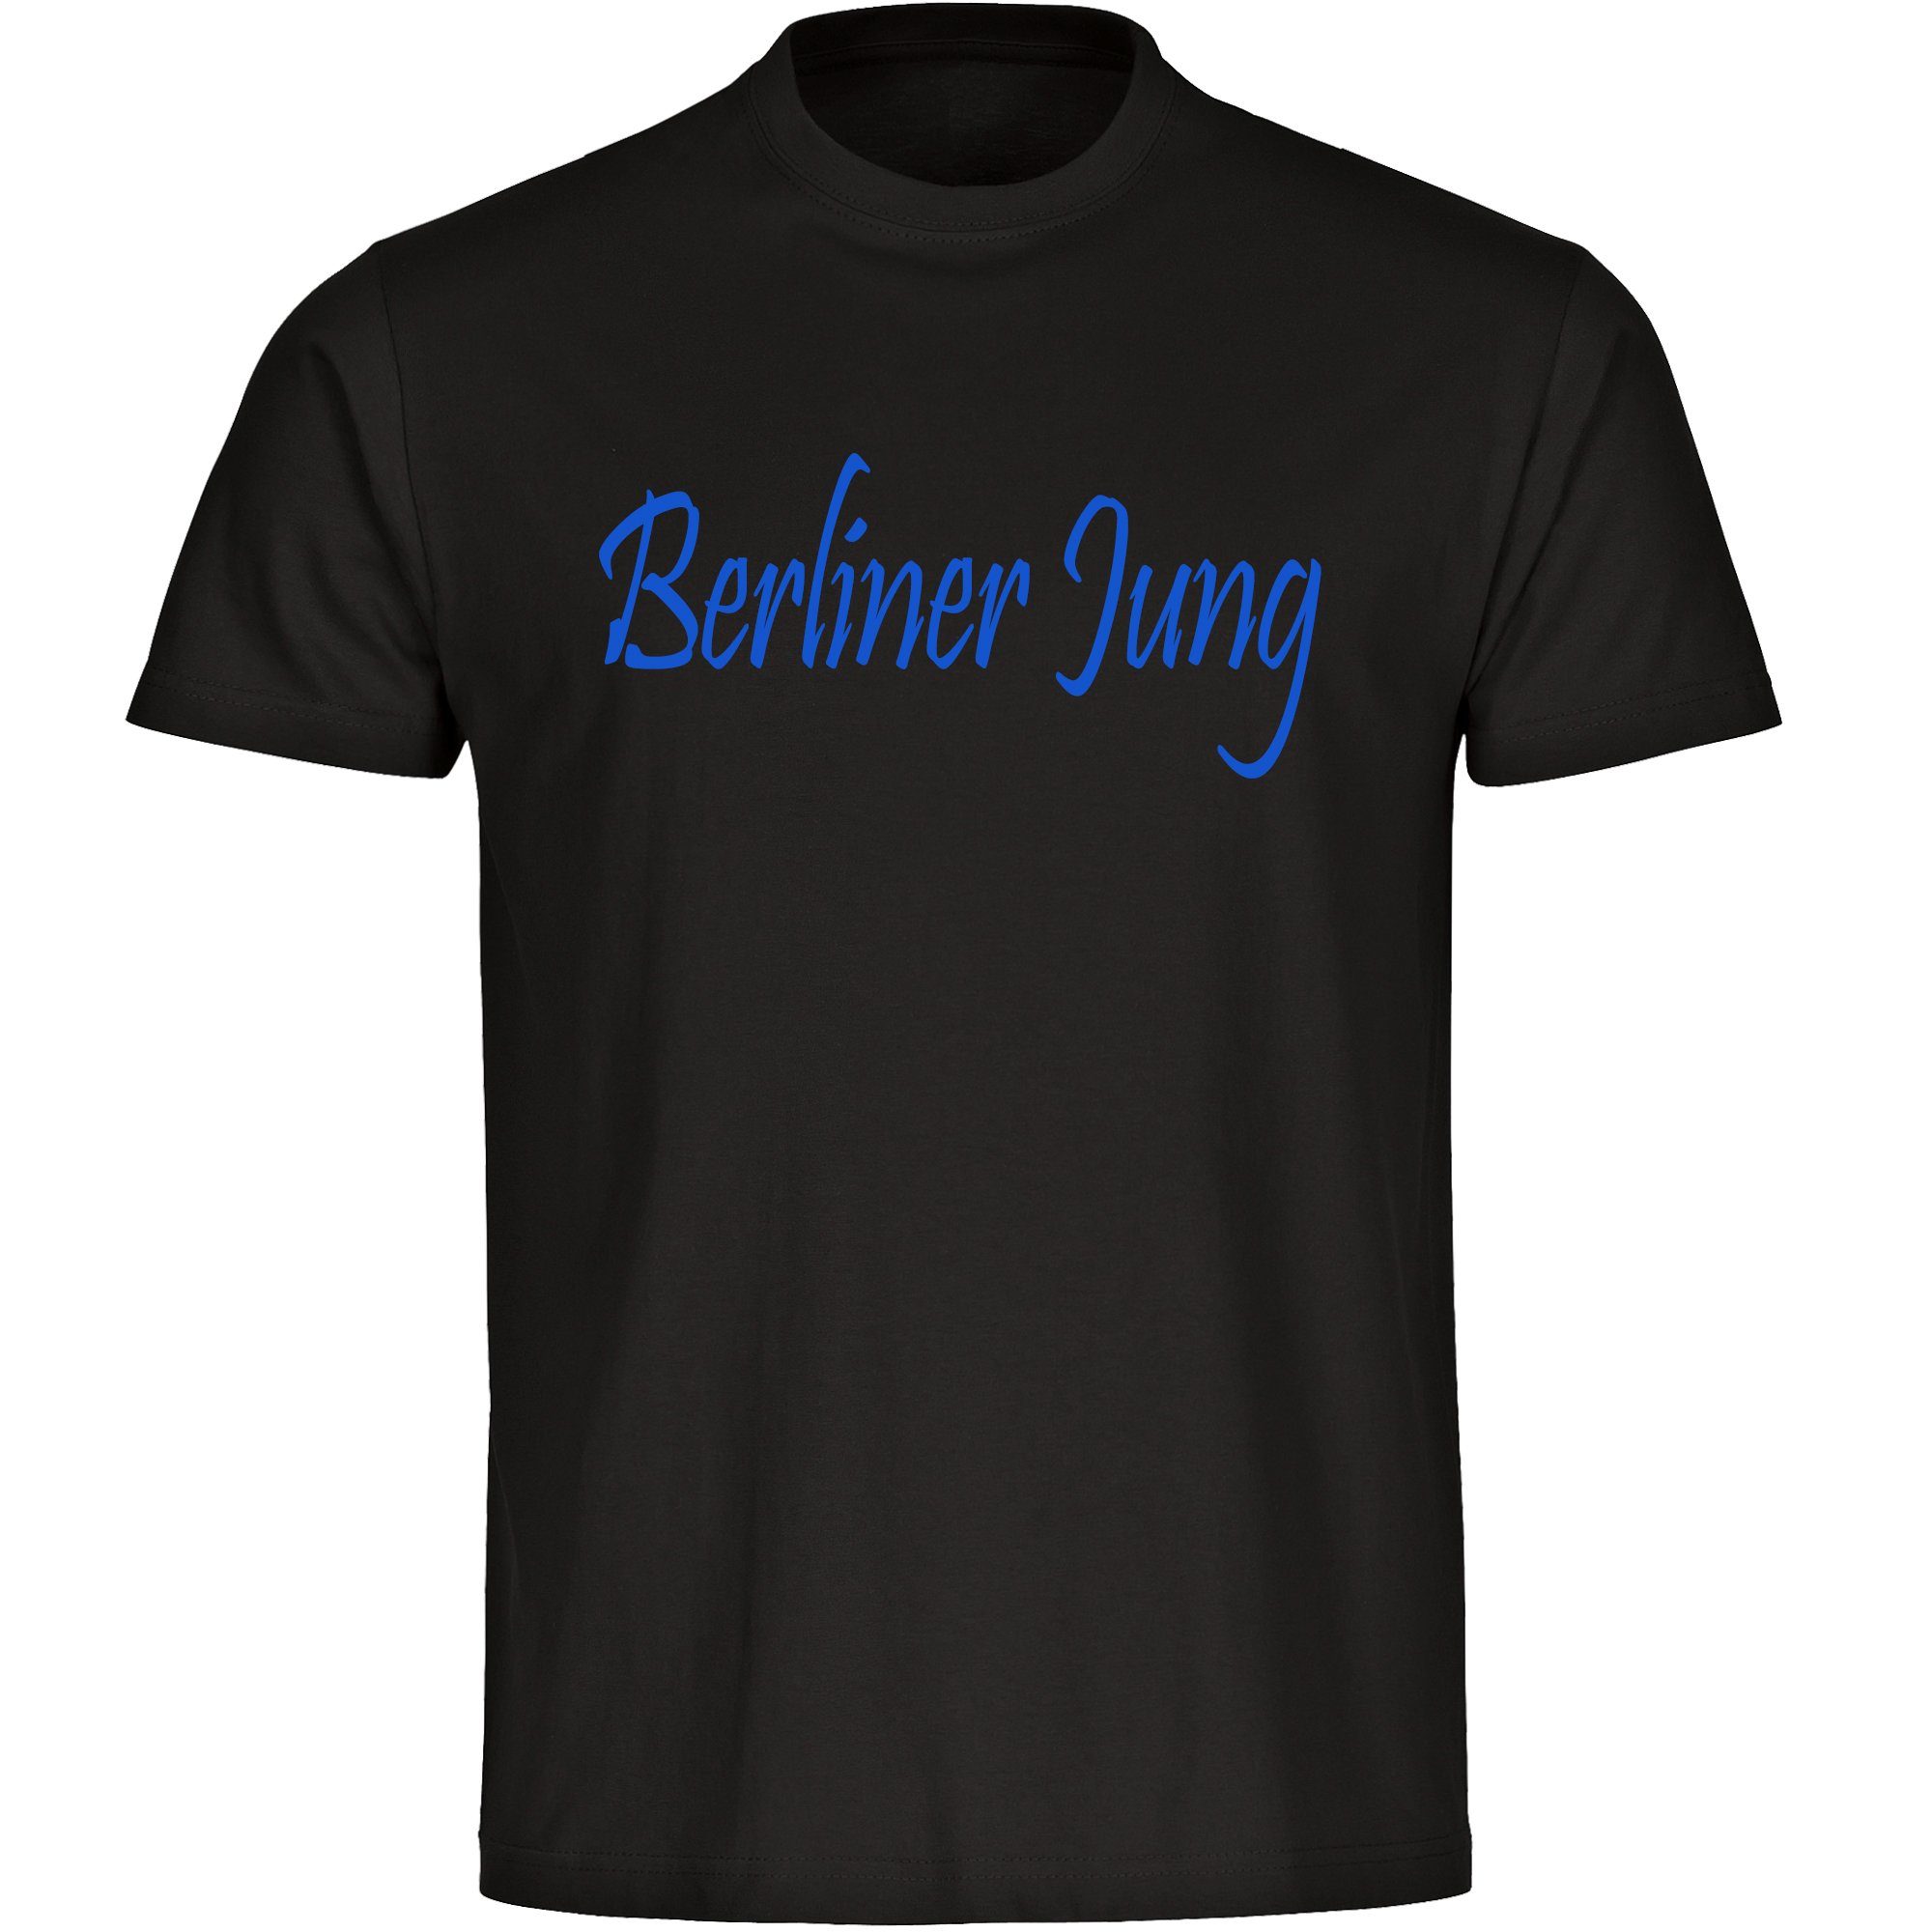 multifanshop T-Shirt Kinder Berlin blau - Berliner Jung - Boy Girl